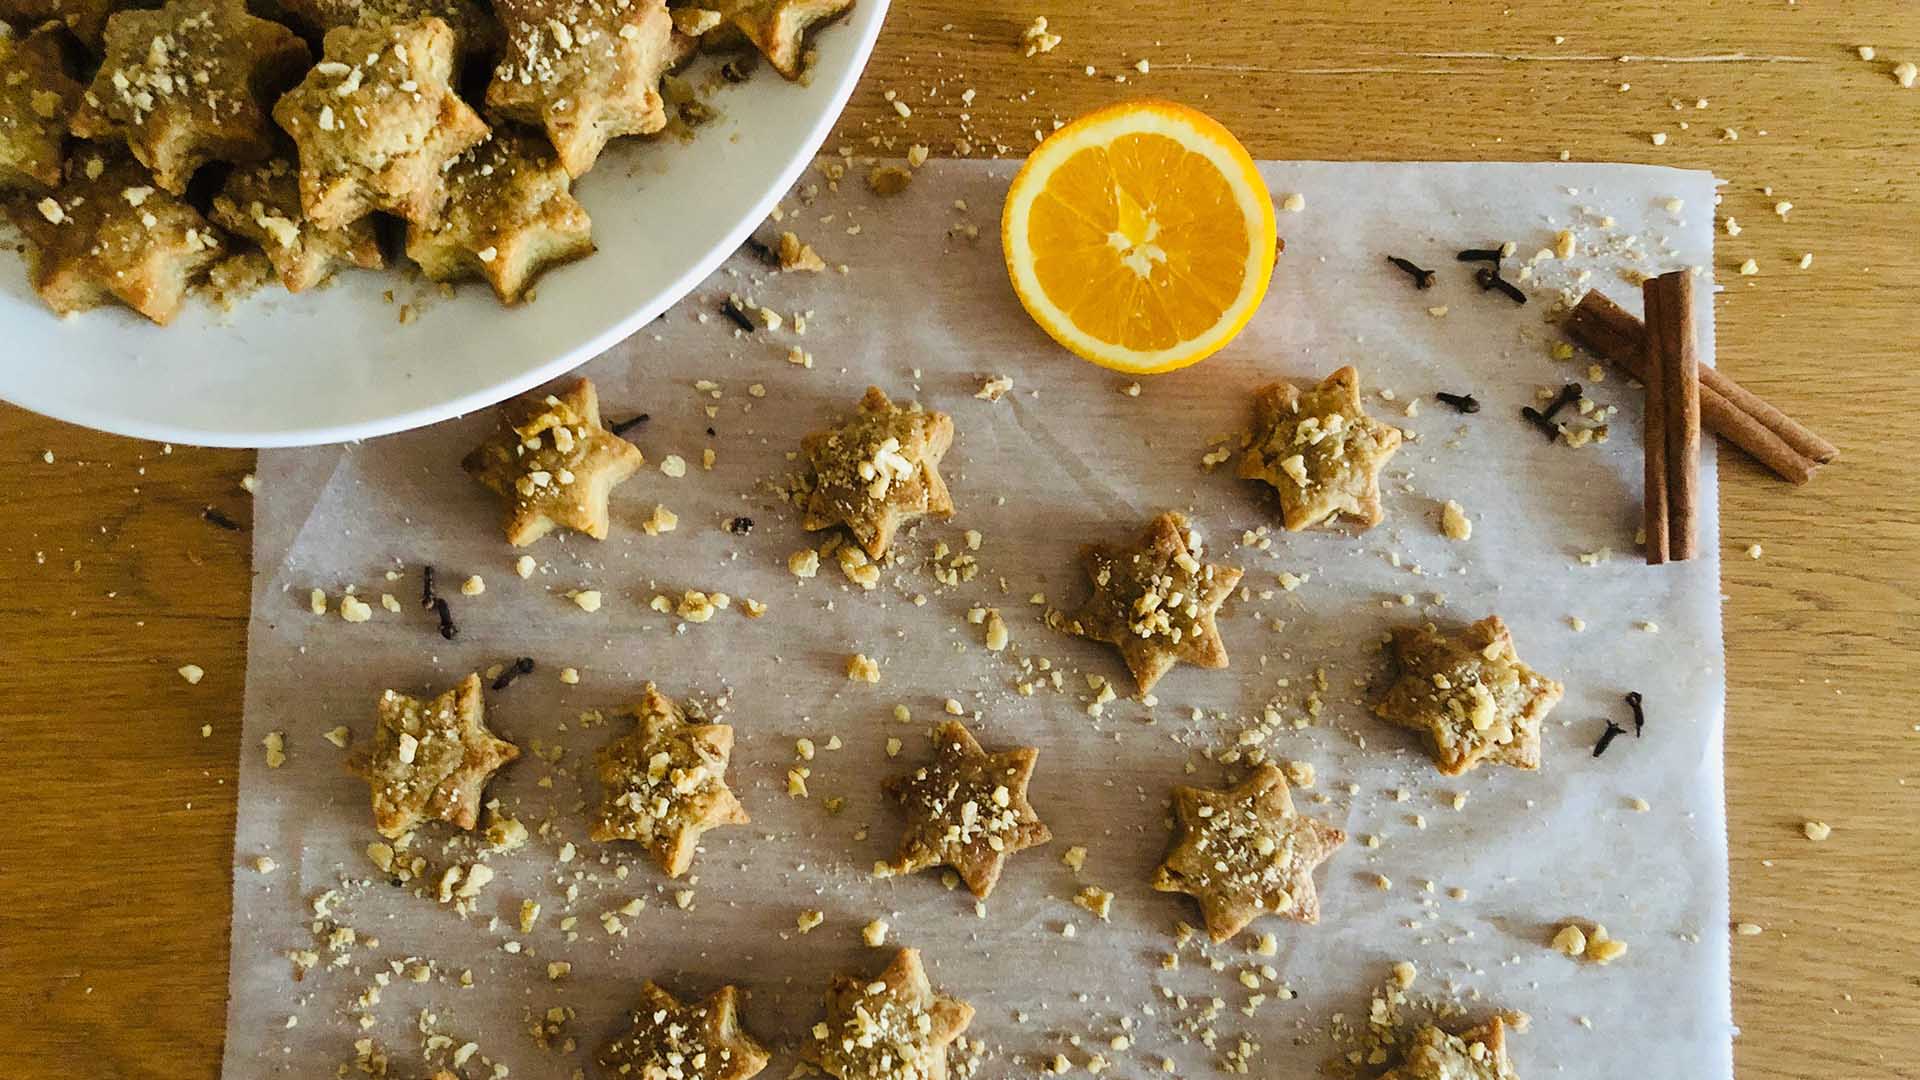 Melomakarona - Greek Christmas Honey Cookies